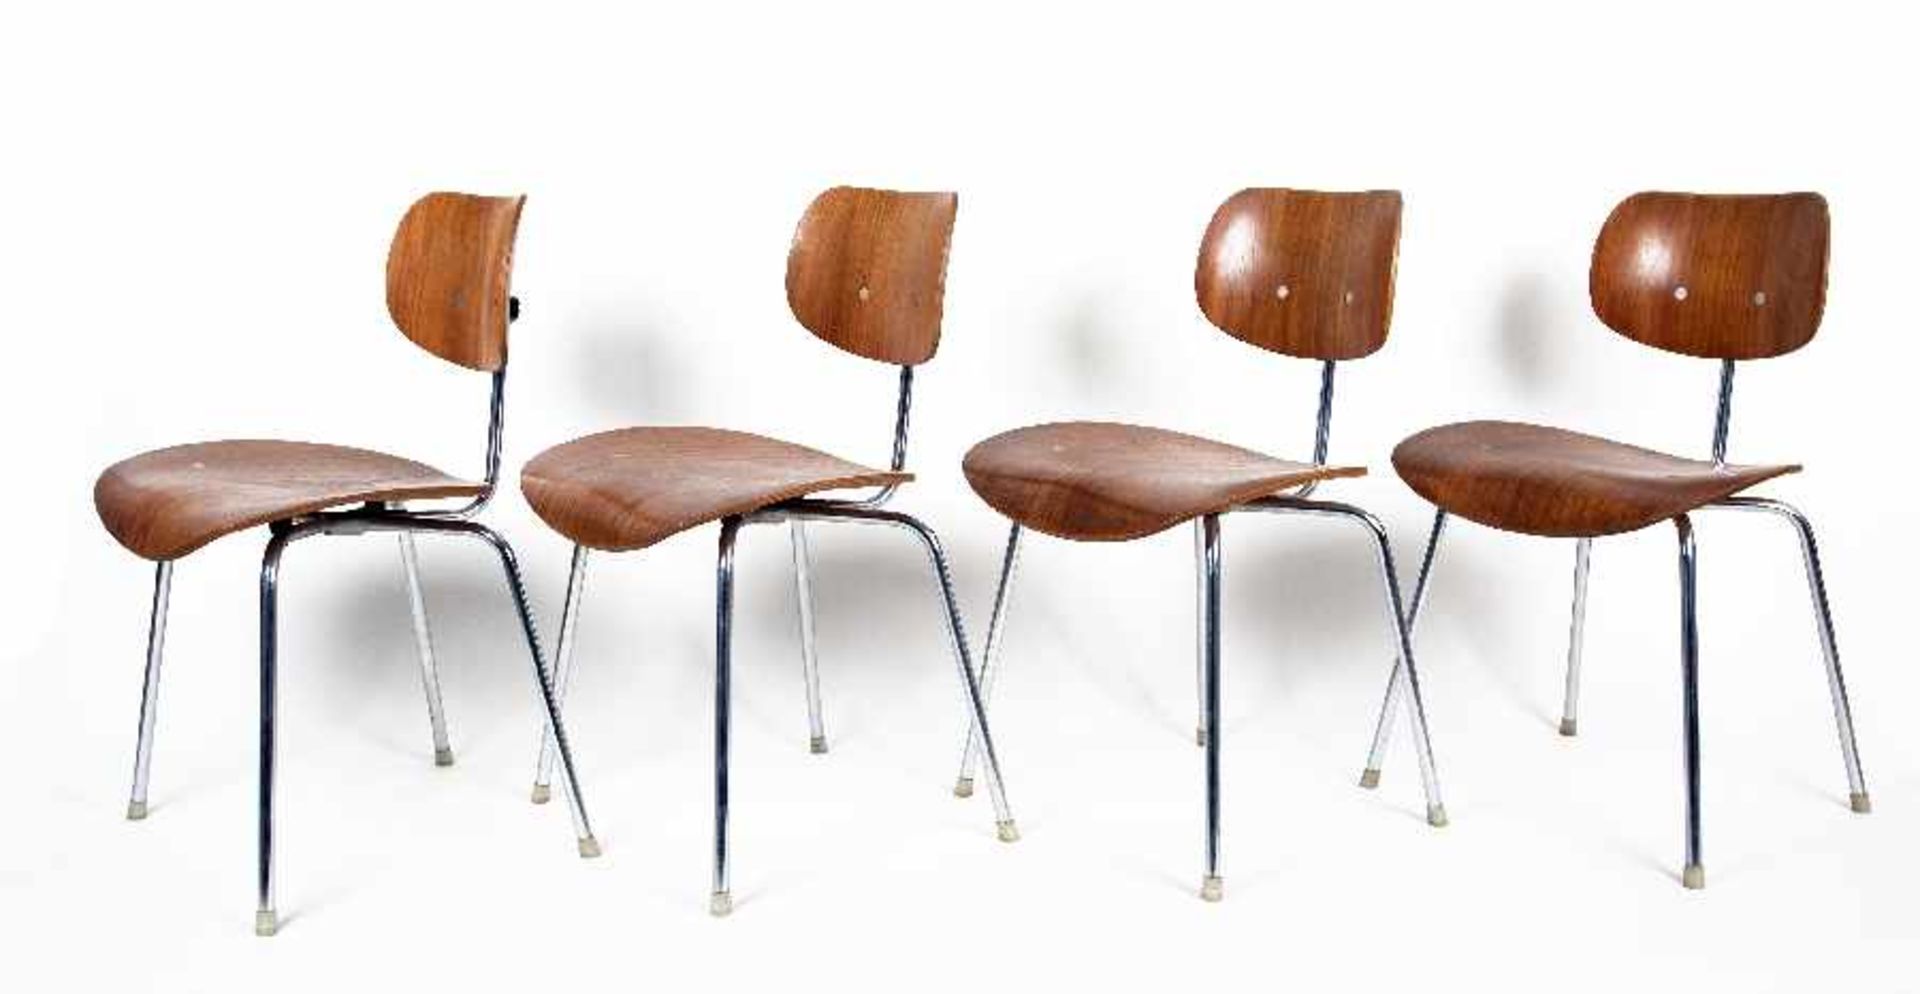 Egon Eiermann1904 Berlin - 1970 Baden BadenSE 68 (4 chairs)Steel tube with teak, 1951; H 77 cm, W